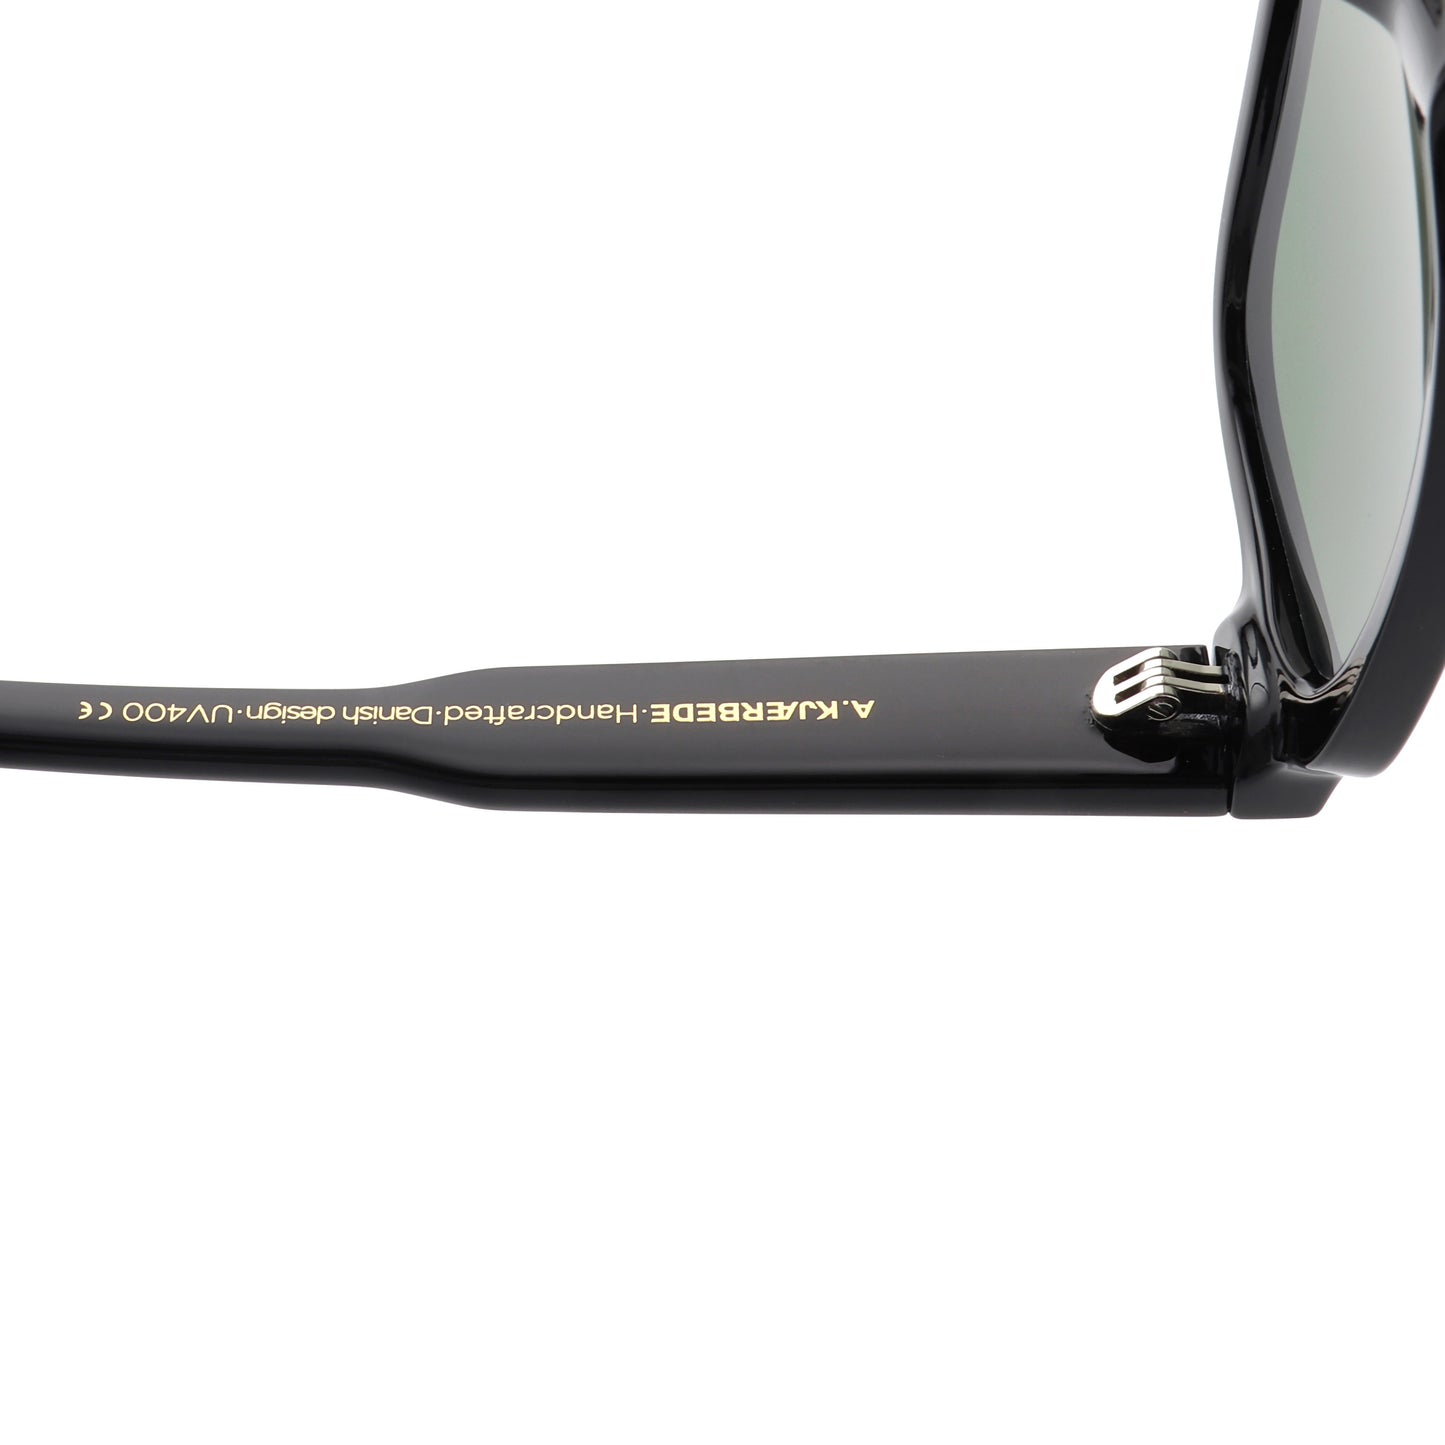 A.Kjaerbede Halo Sunglasses in Black color